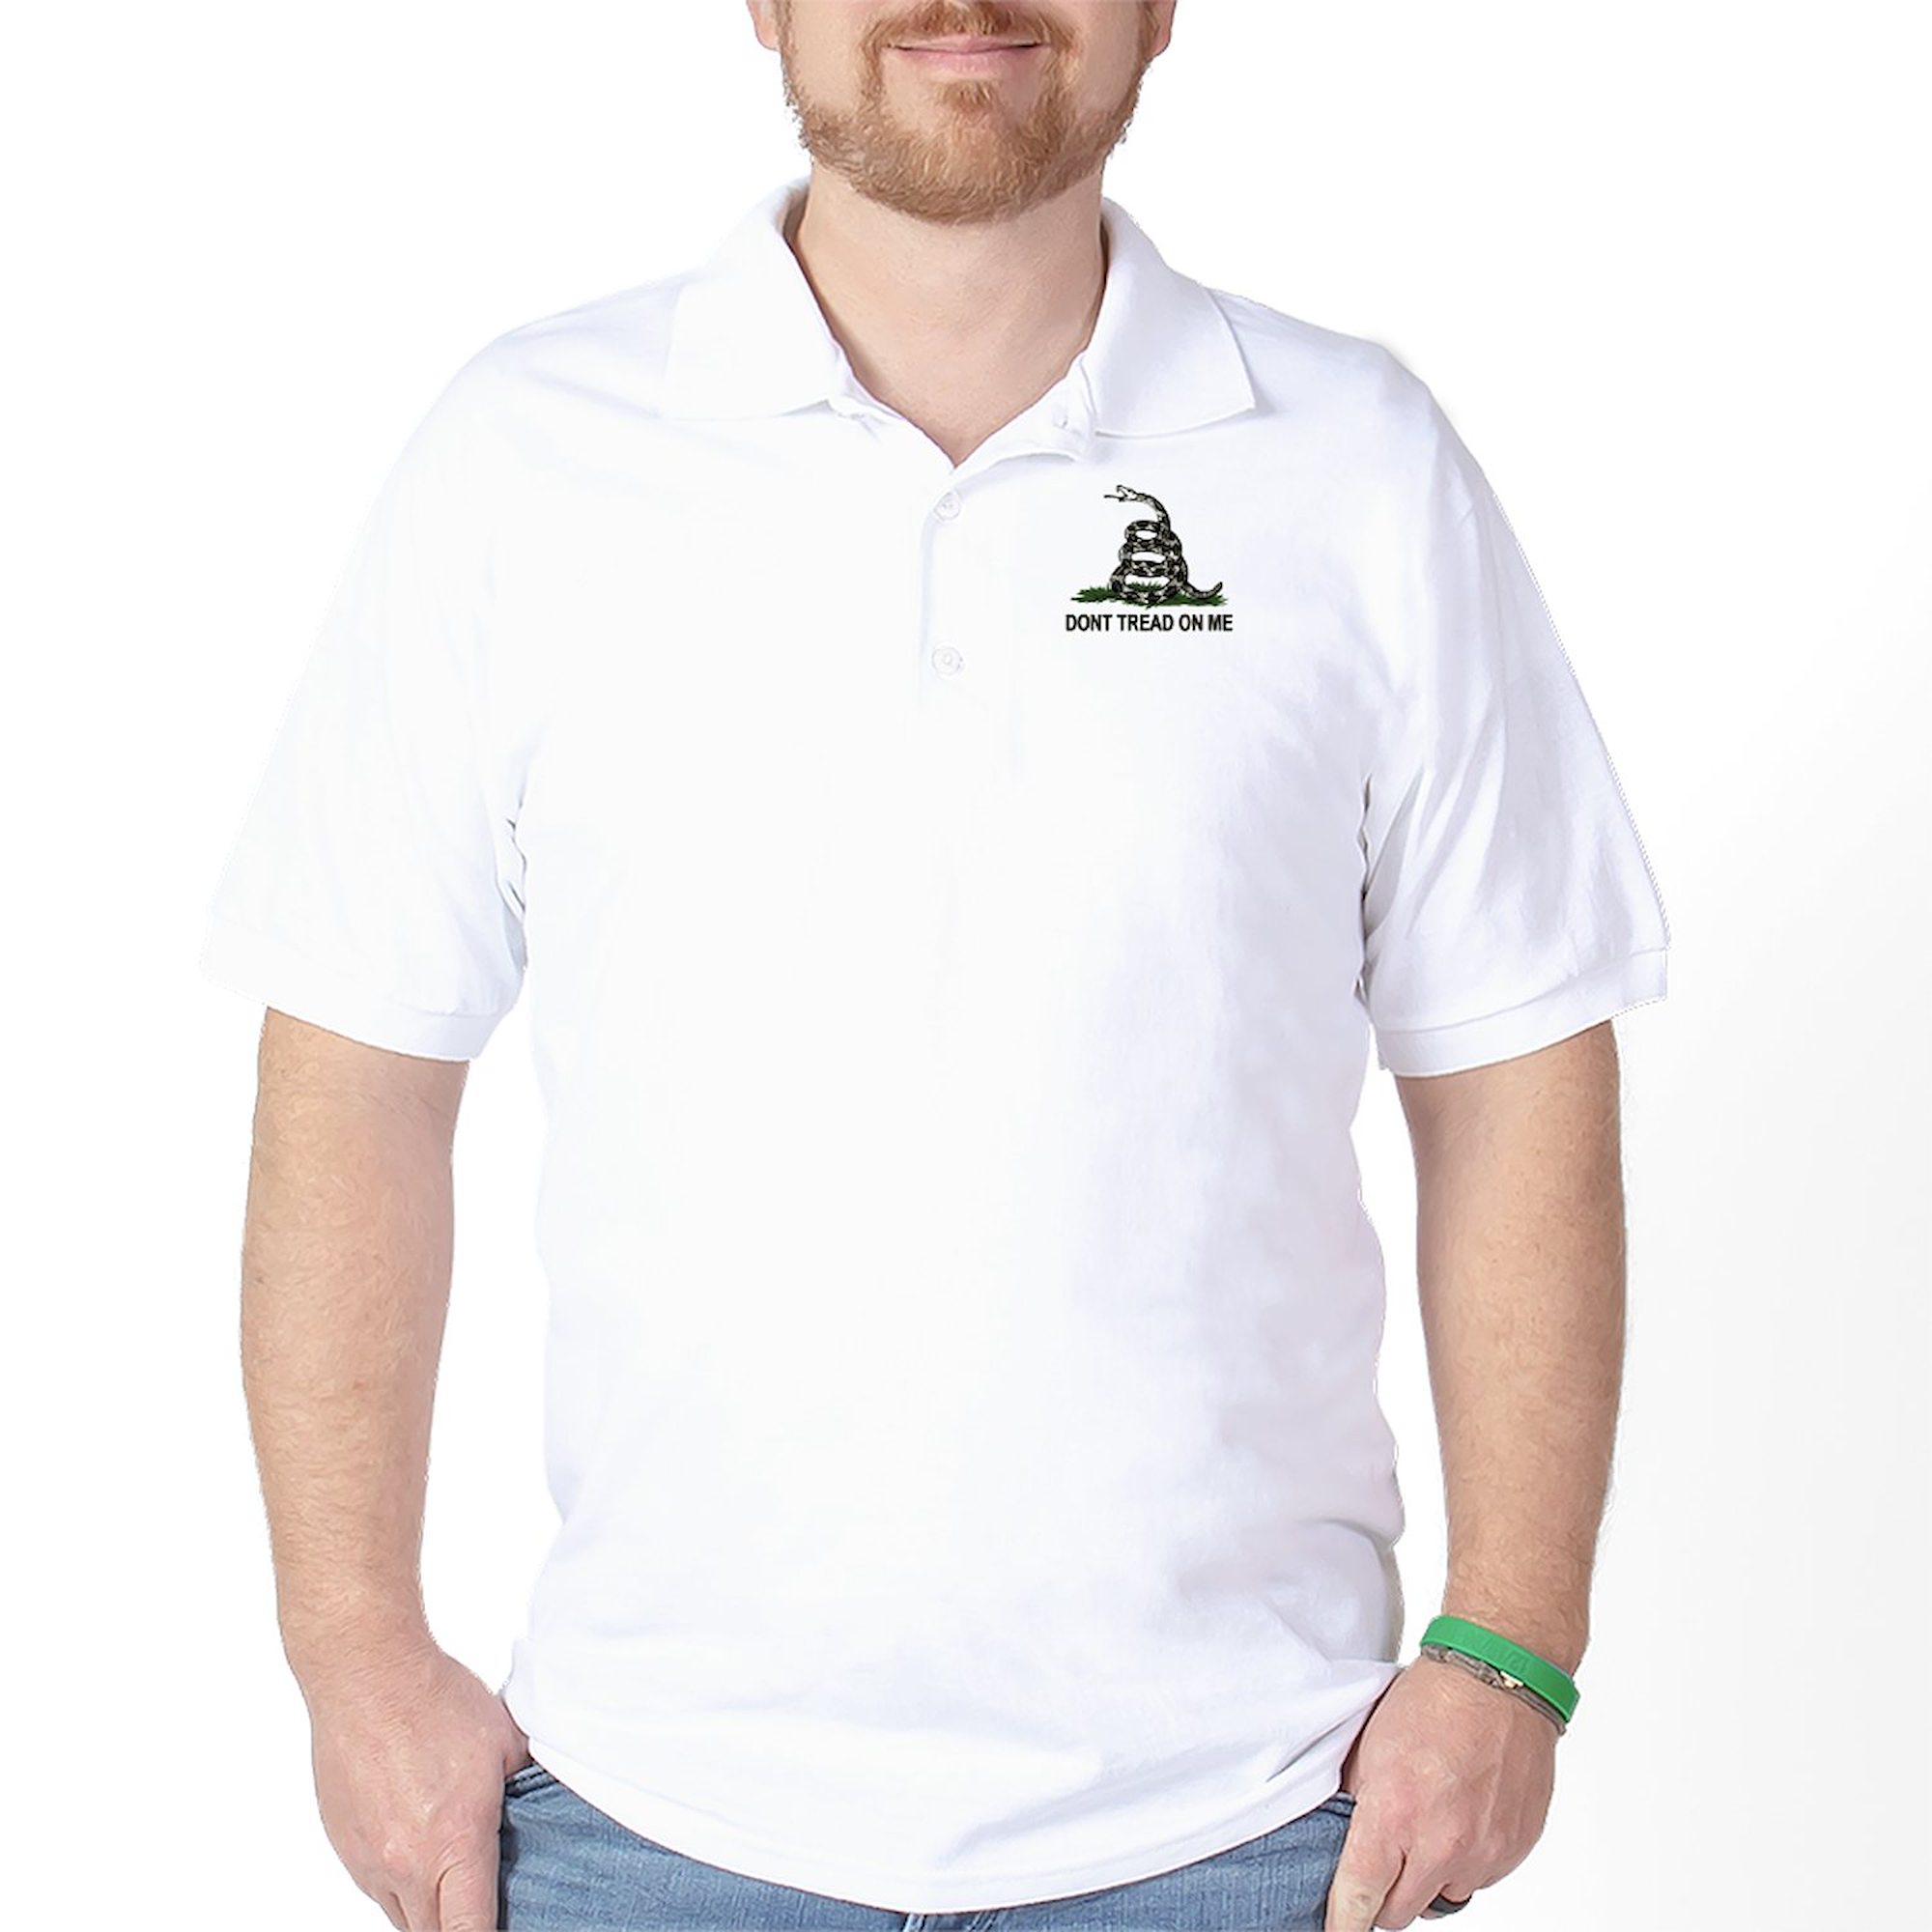 CafePress - Don't Tread On Me Golf Shirt - Golf Shirt, Pique Knit Golf Polo - image 1 of 4